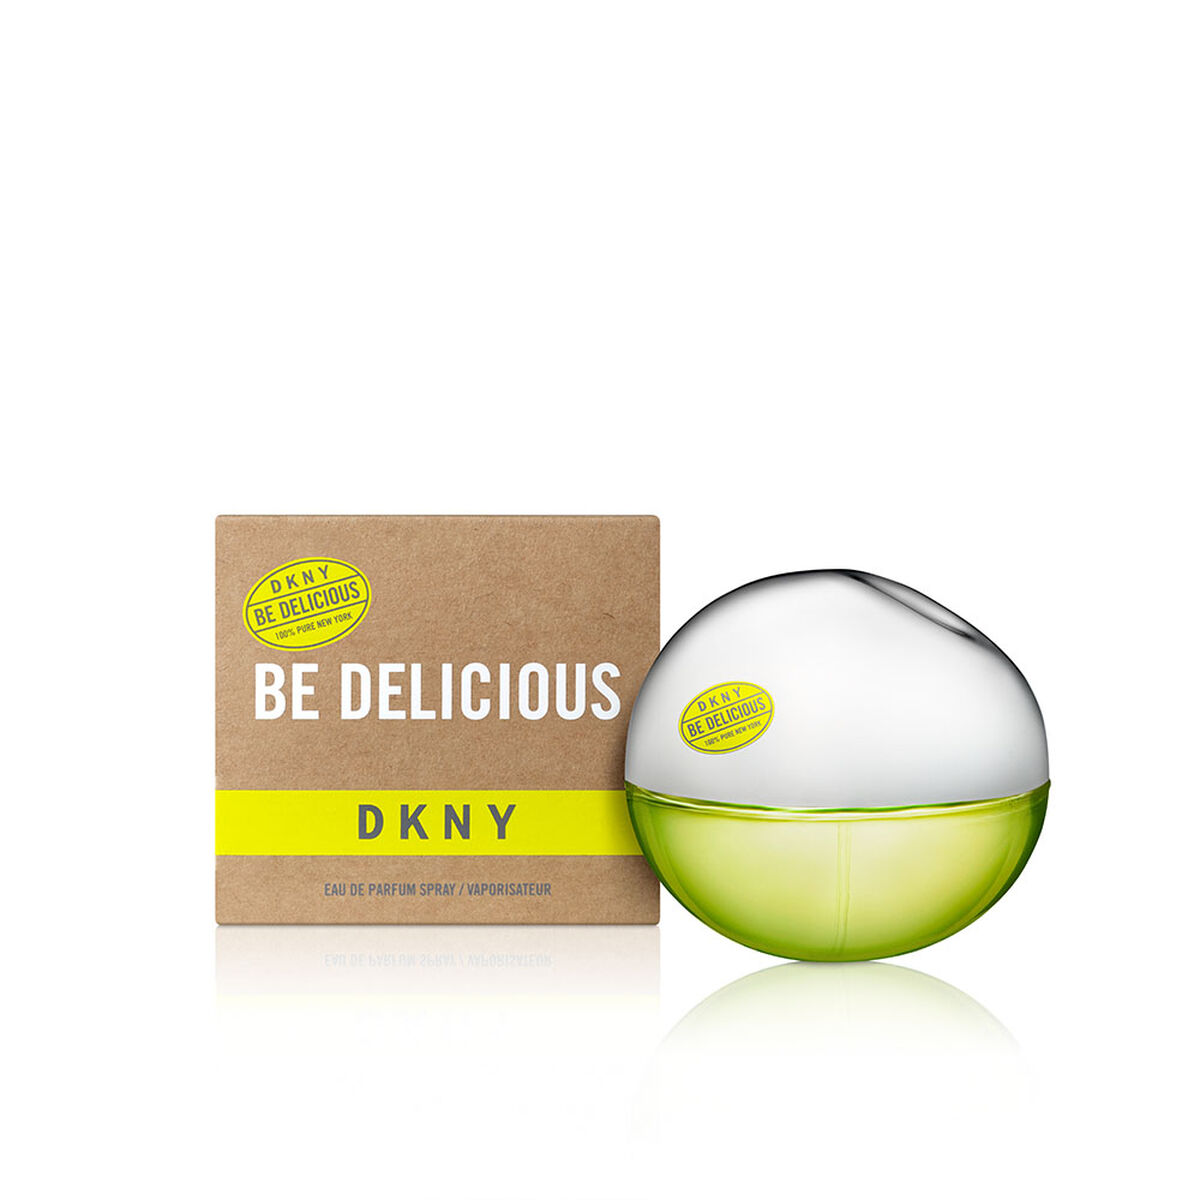 Perfume DKNY Be Delicious 30 ml